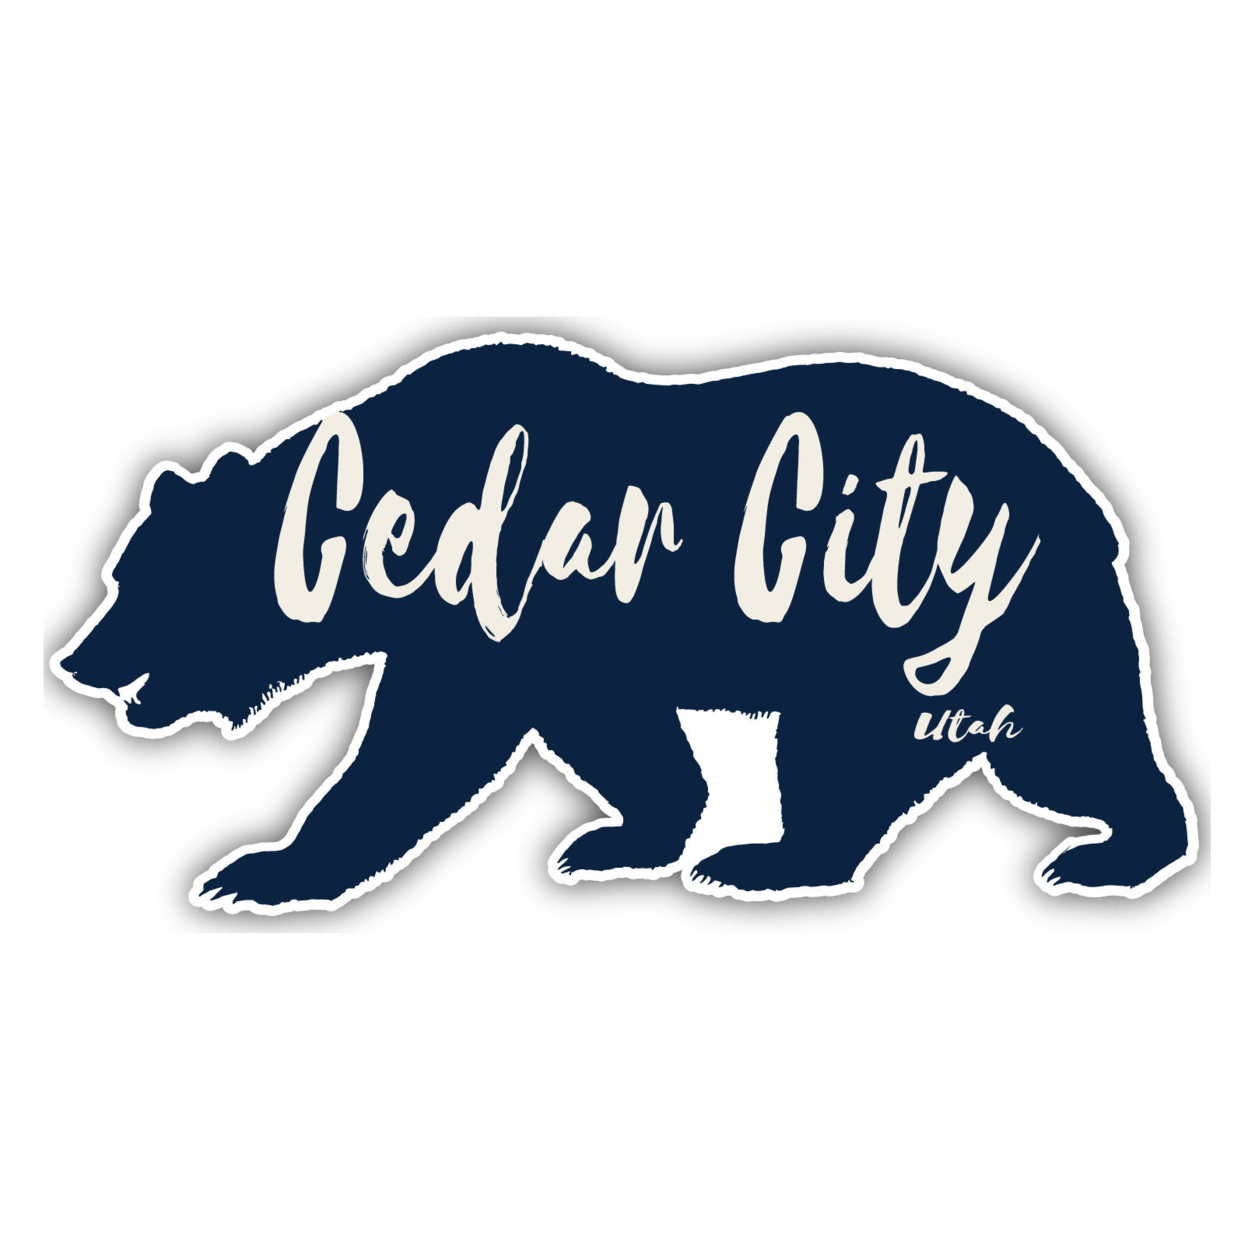 Cedar City Utah Souvenir Decorative Stickers (Choose Theme And Size) - 4-Pack, 2-Inch, Bear